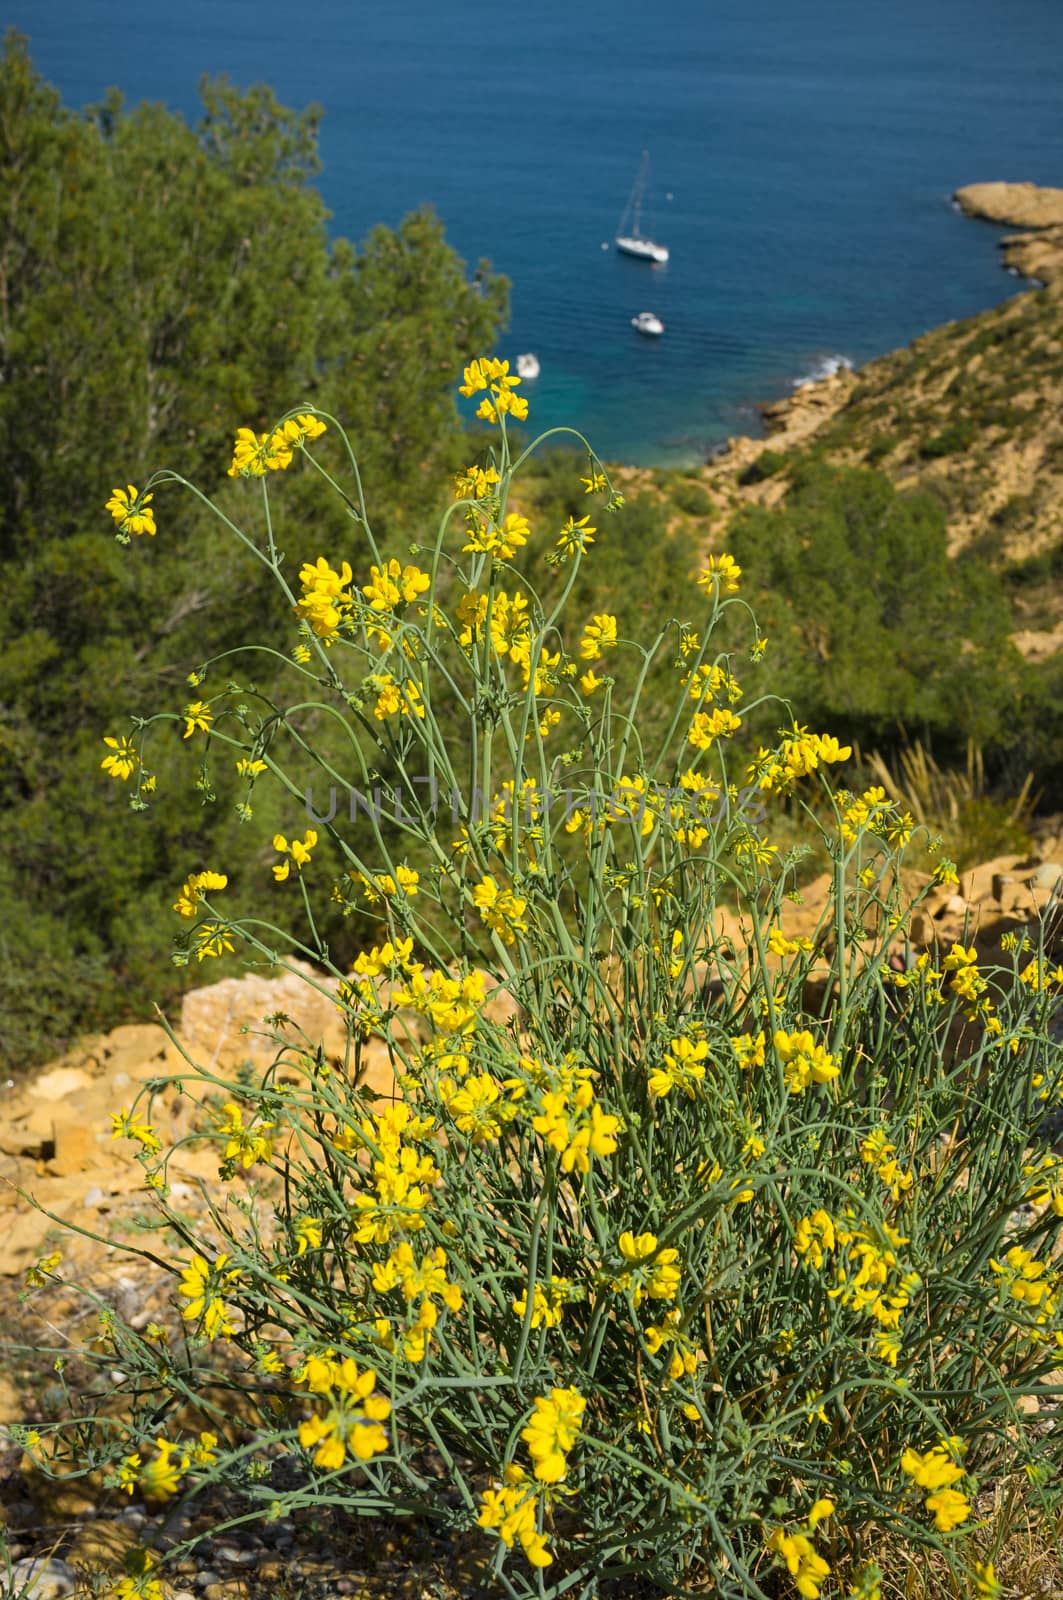 Genista shrub flowering against the background of  a sunny Mediterranean bay